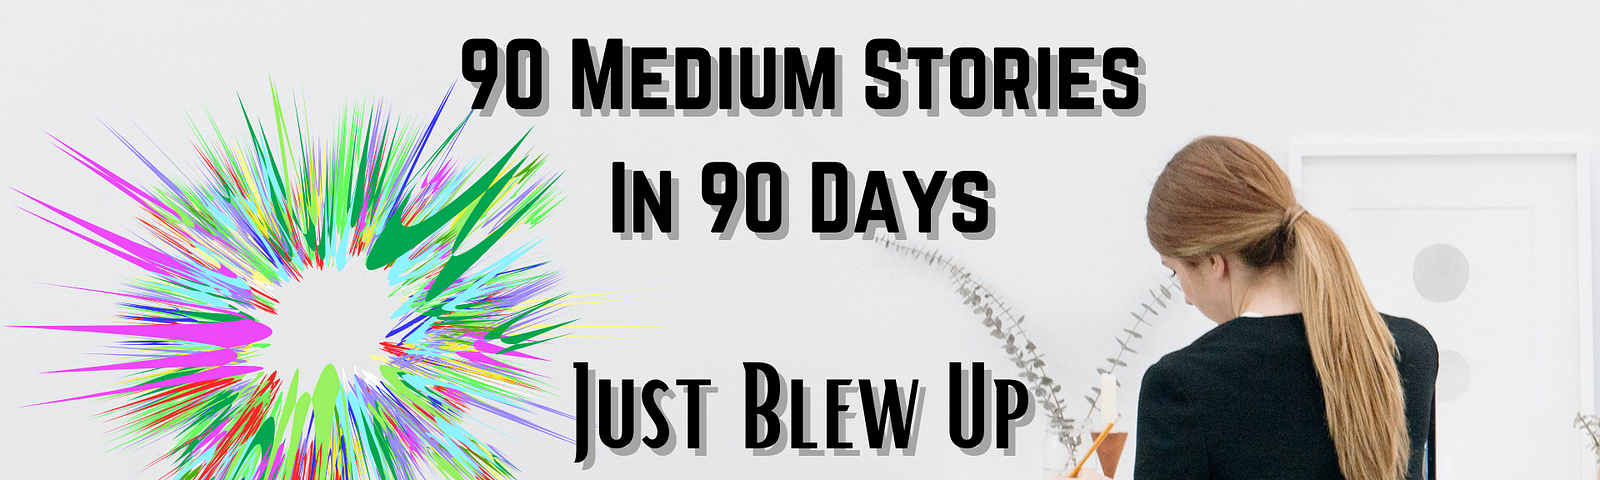 writing 90 medium stories in 90 days